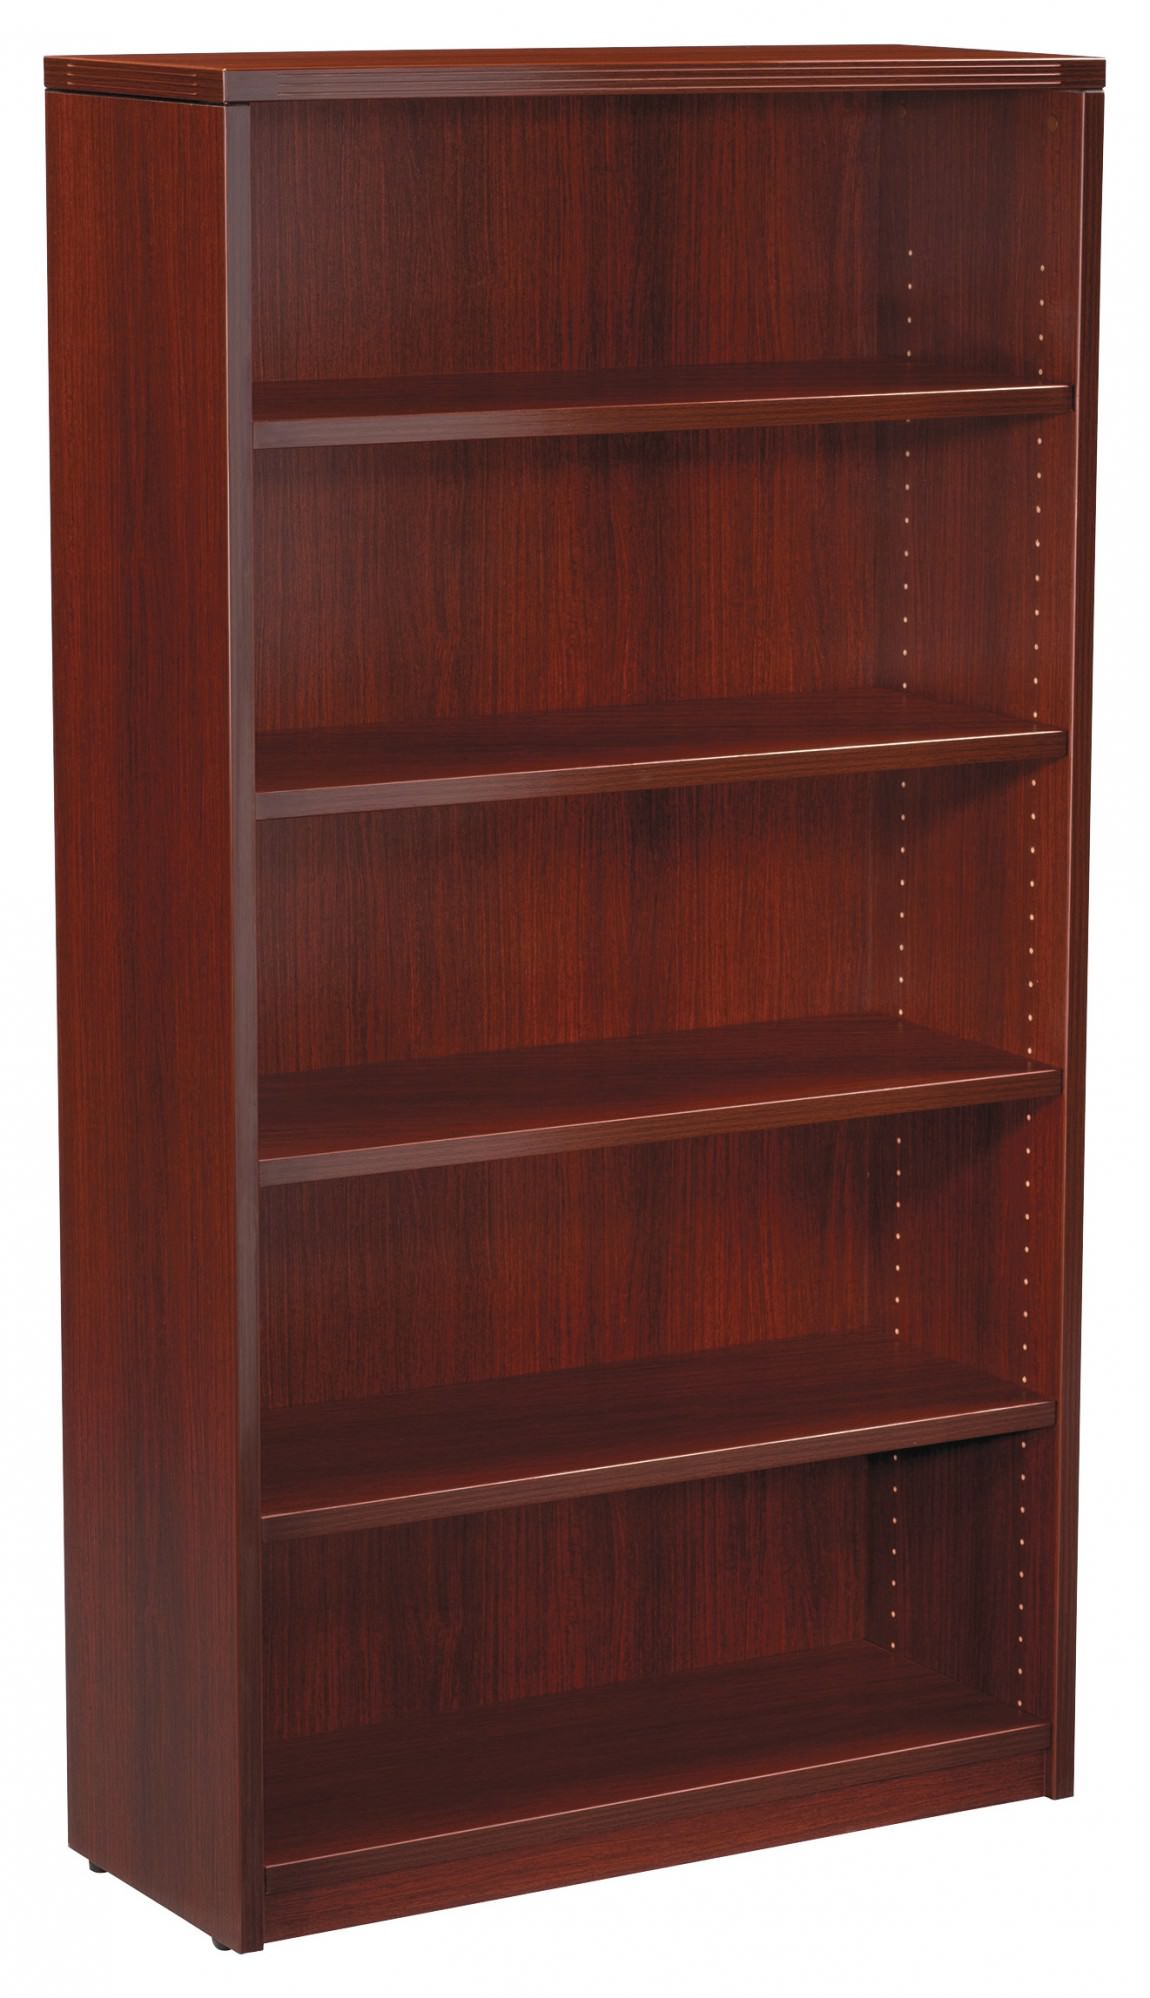 https://madisonliquidators.com/images/p/1150/19482-5-shelf-bookcase-65-tall-2.jpg